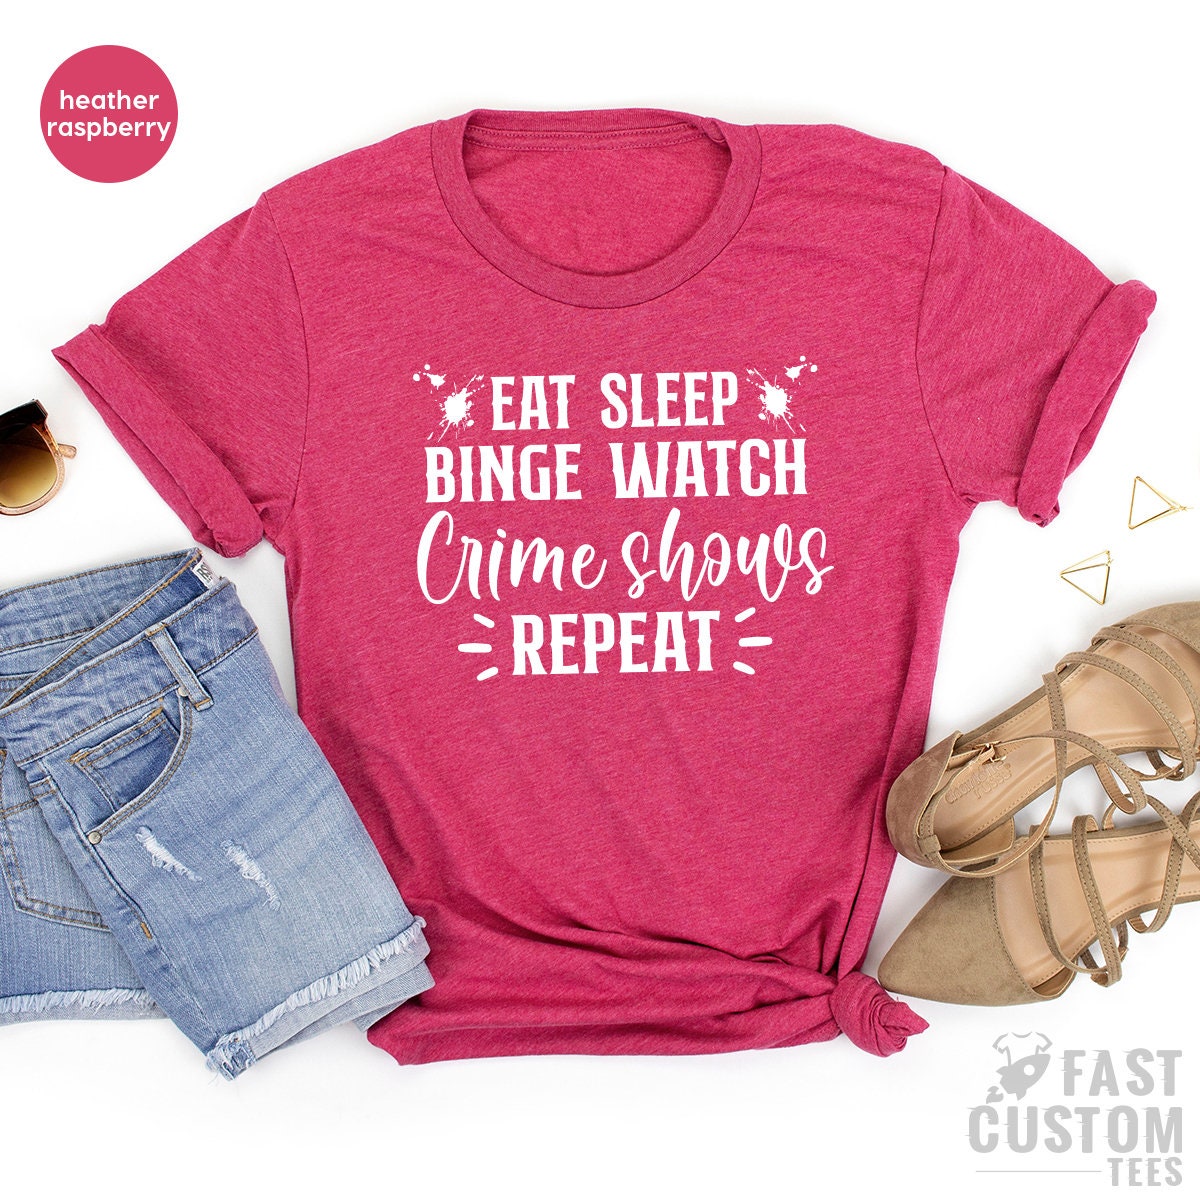 Funny Crime Shirt, Crime Shows Tshirt, Crime Addict Shirt, Horror Series Shirt, Crime Lover Shirt, True Crime Fan Tee, Murderer Shirt - Fastdeliverytees.com